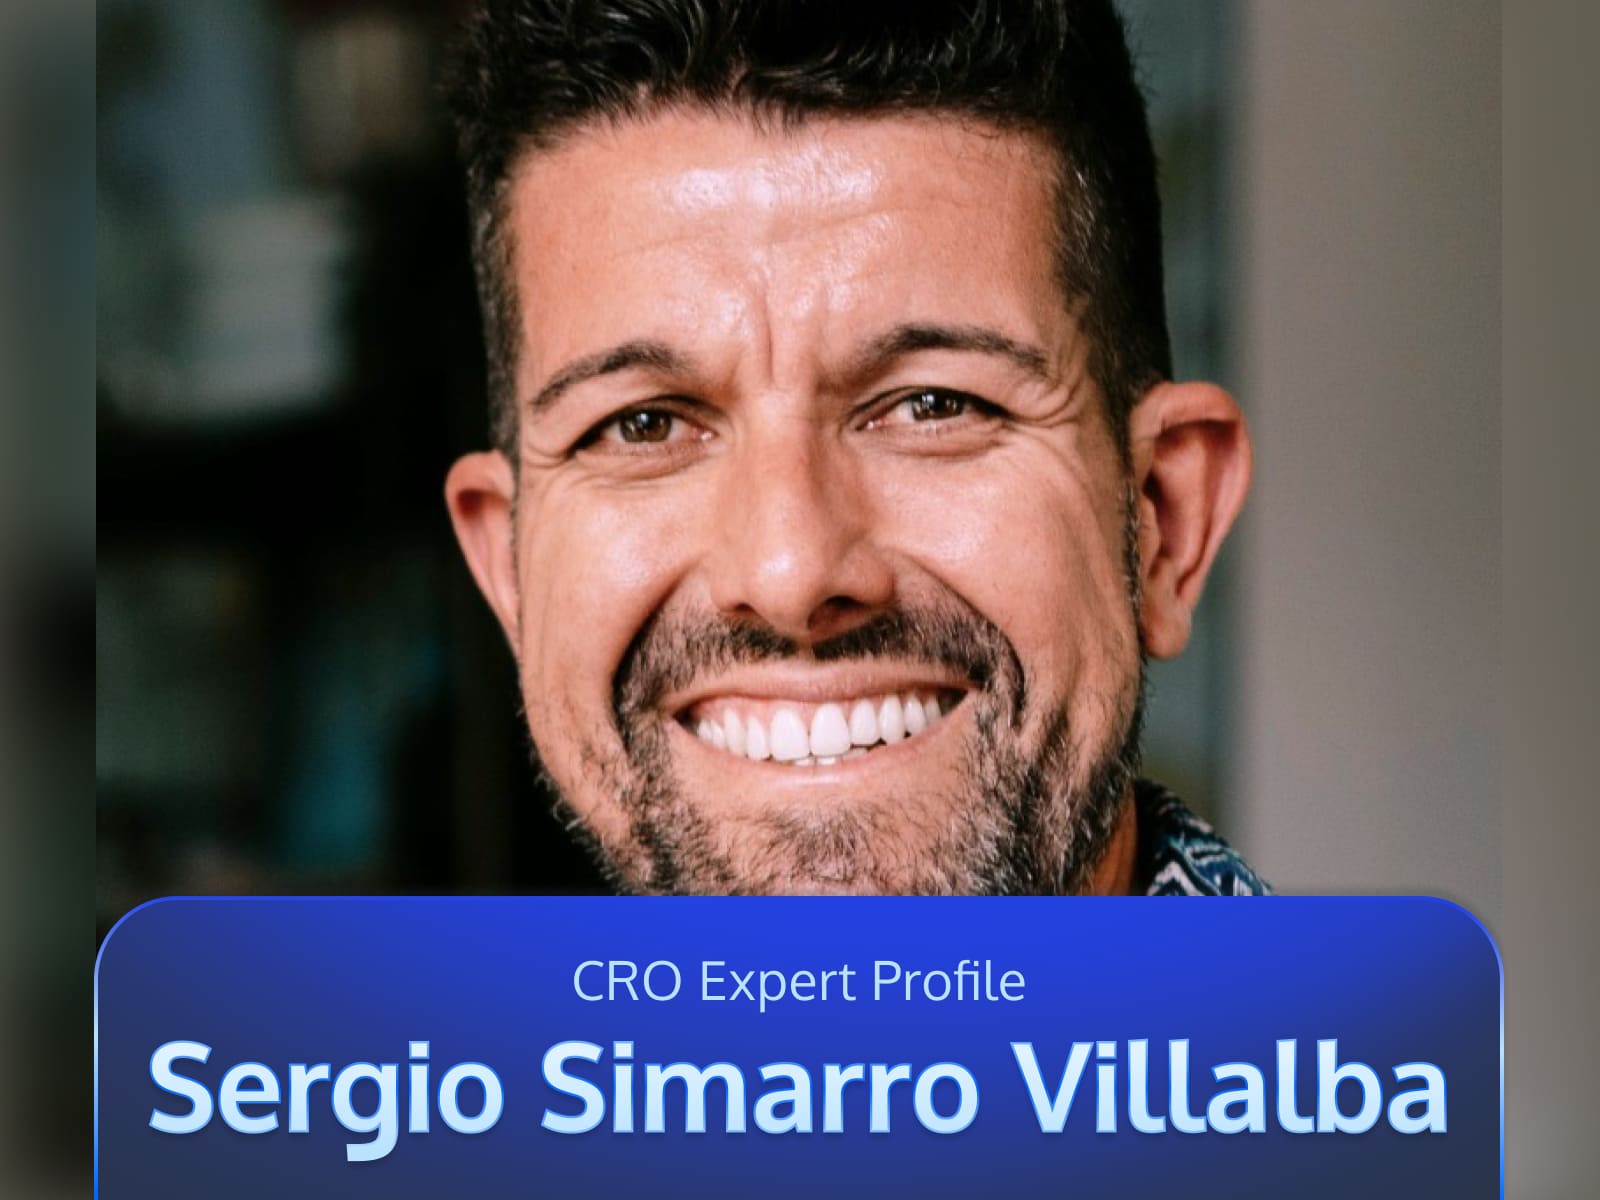 Interview with Sergio Simarro Villalba